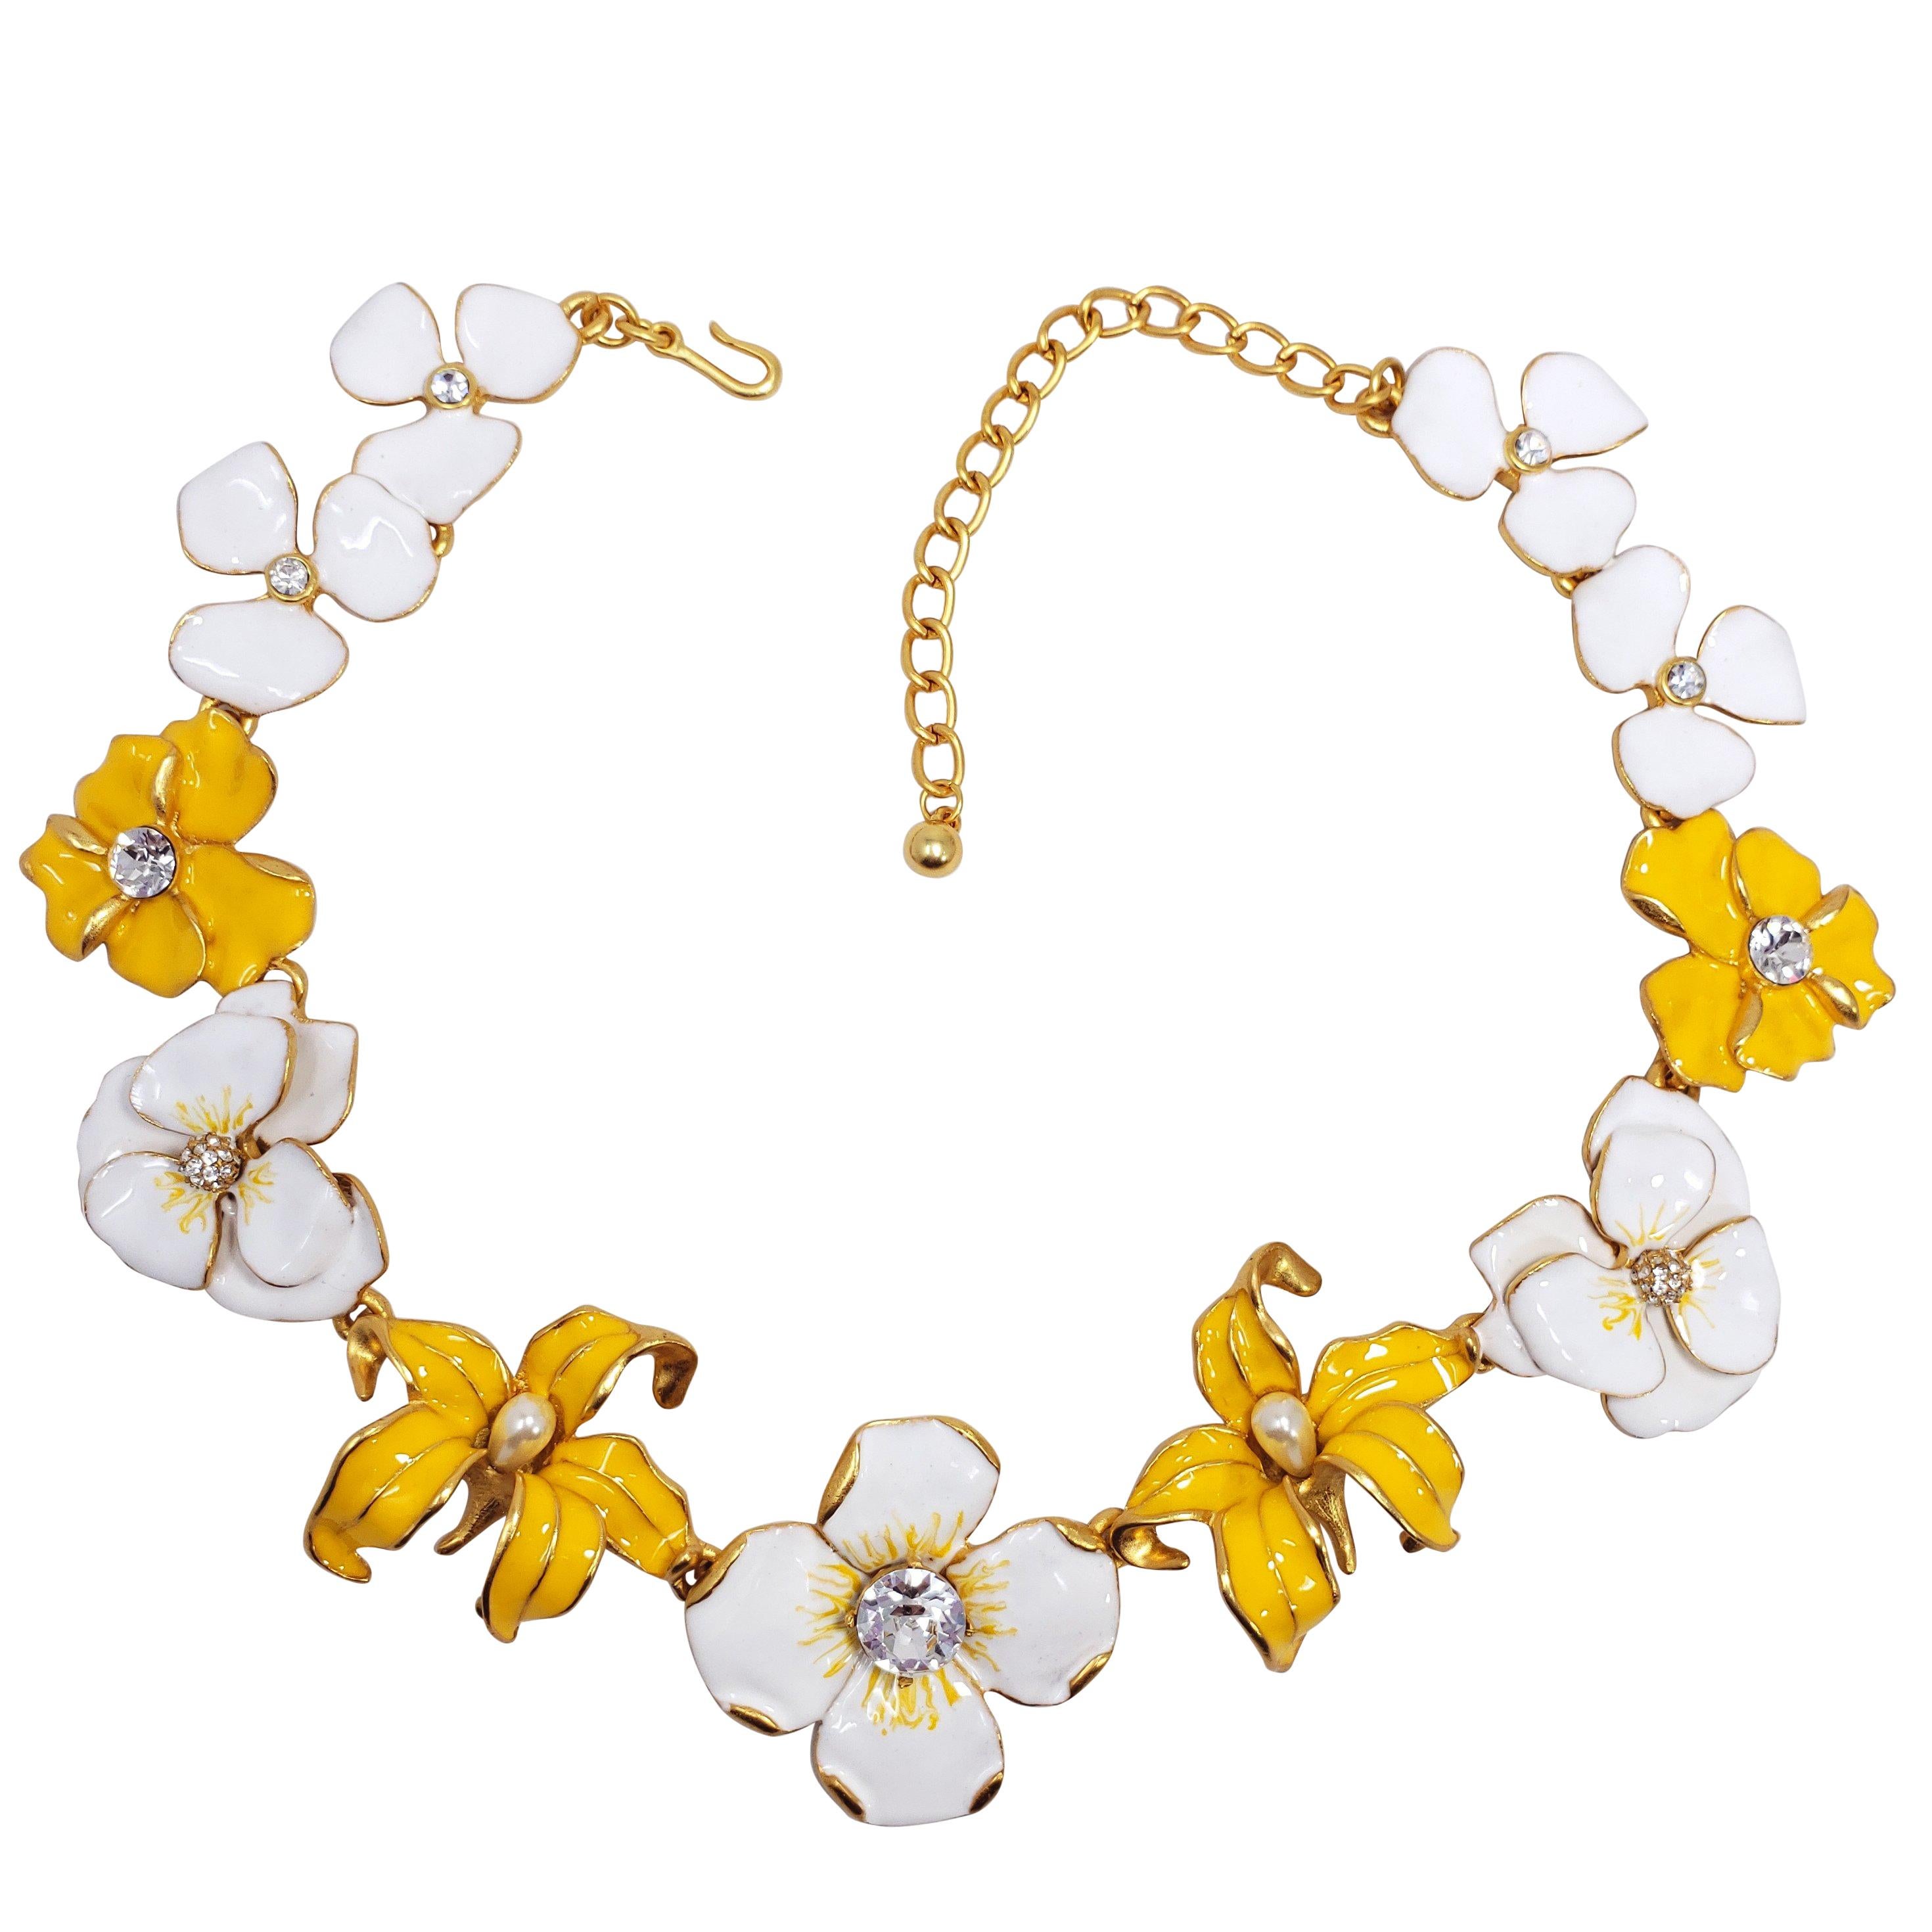 KJL Kenneth Jay Lane Flower Necklace Yellow White Enamel Faux Pearl & Crystals